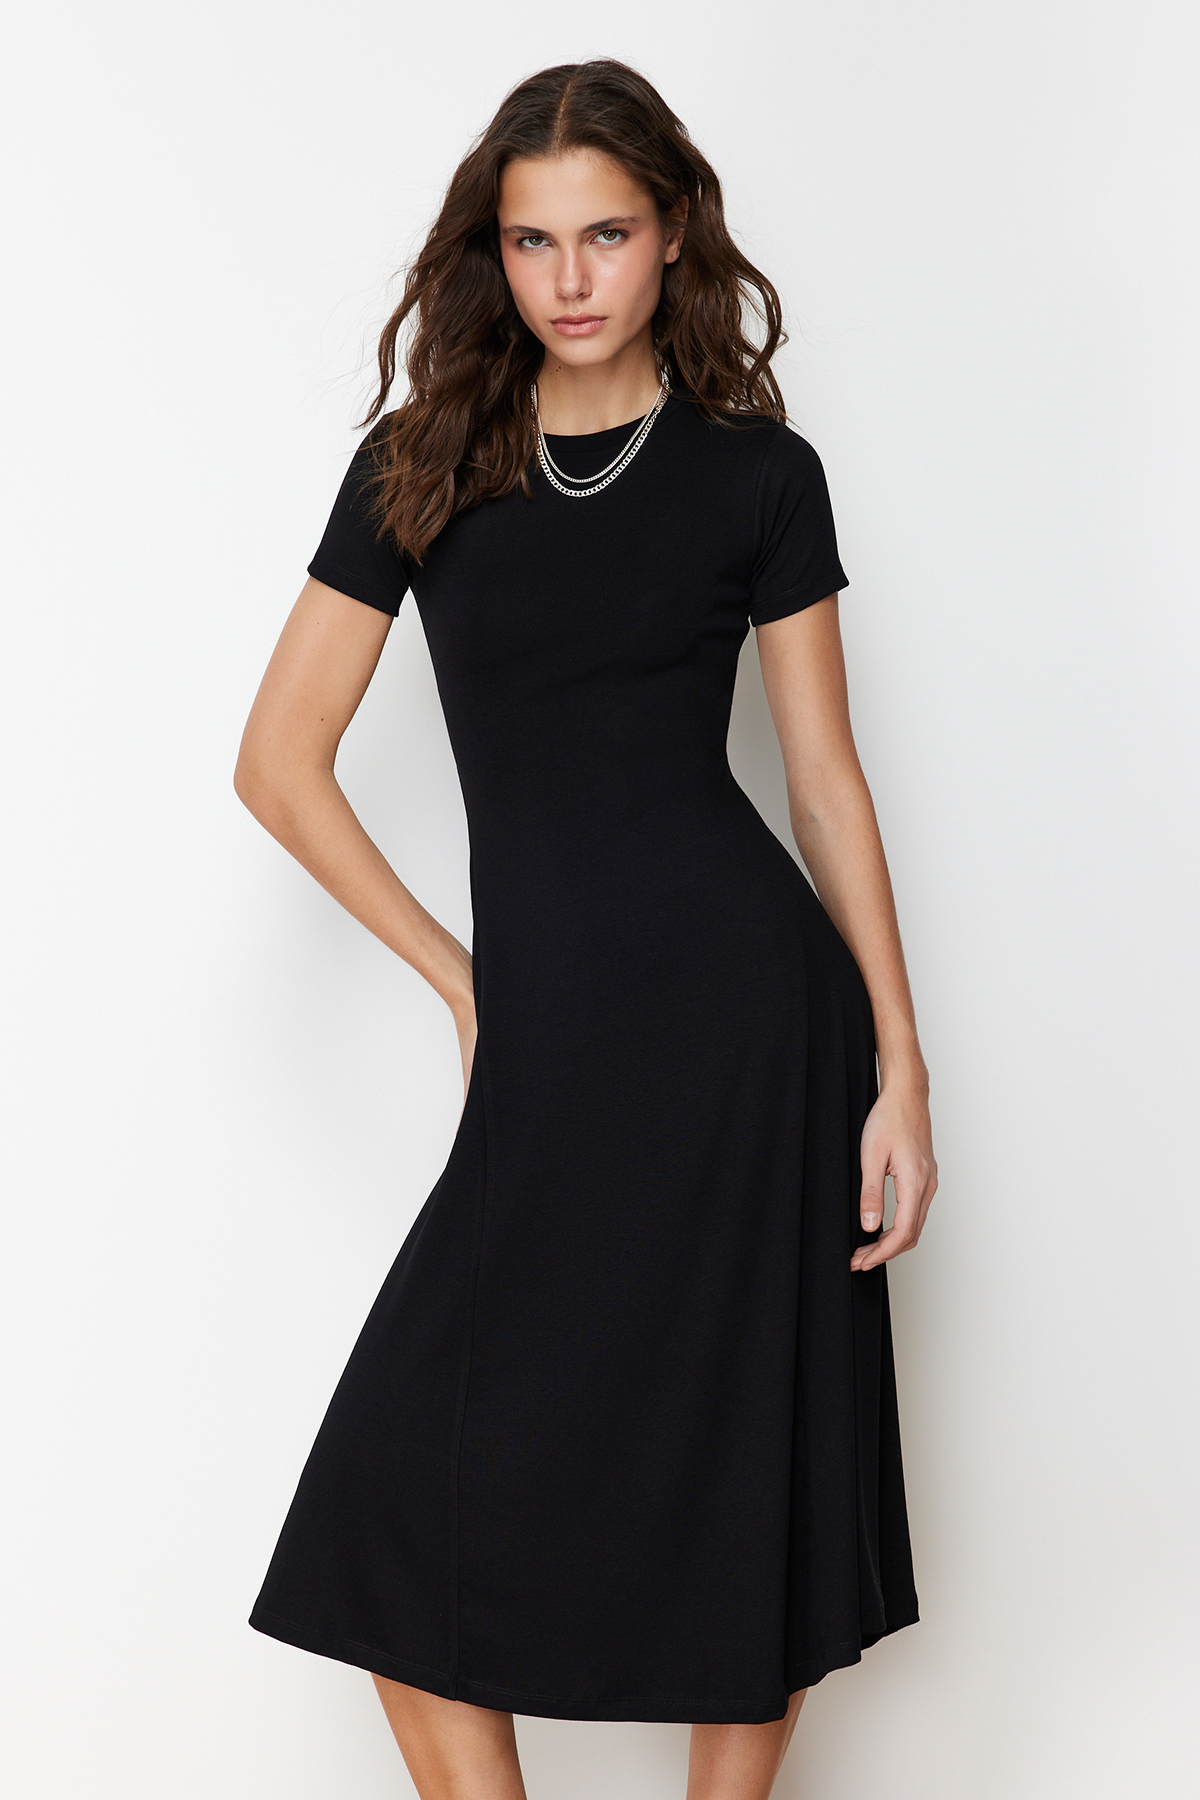 Trendyol Black Flounce Midi Elastic Knitted Dress